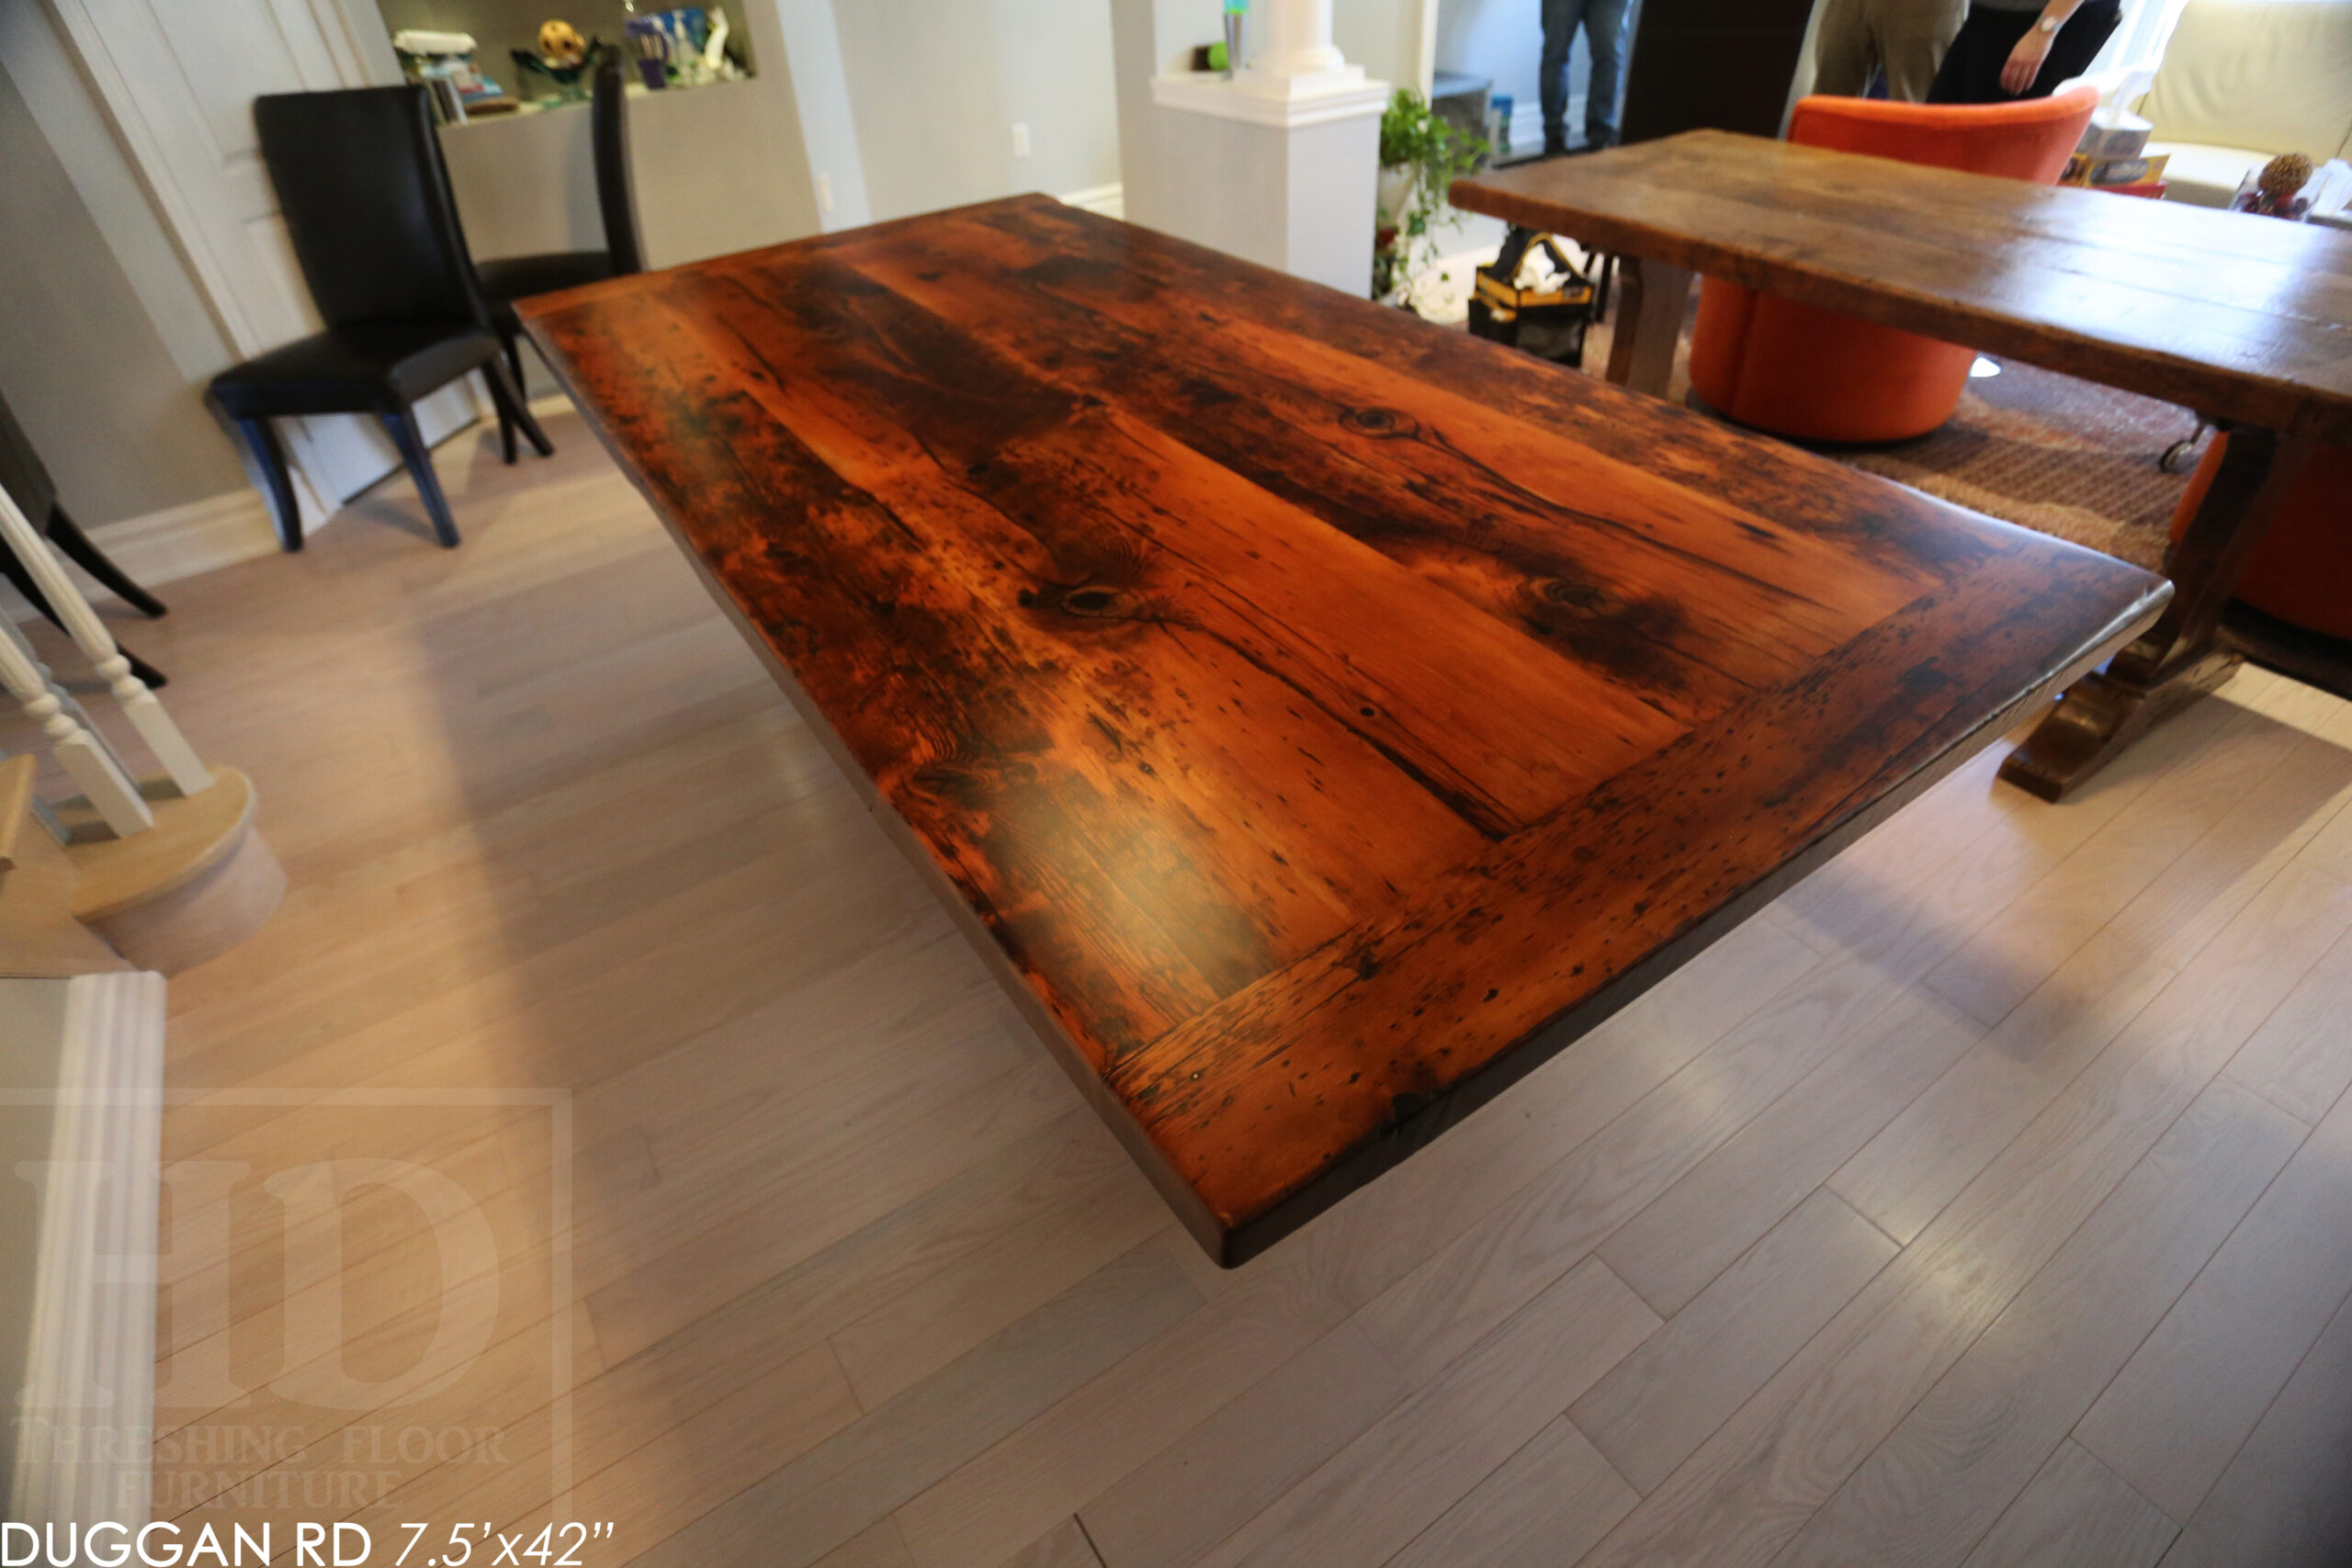 7.5' Reclaimed Wood Table made from Ontario barnwood for Toronto home - 42" wide - Modified Plank Base Option - Hemlock Threshing Floor Construction - Original edges & distressing maintained - Premium epoxy + satin polyurethane finish 